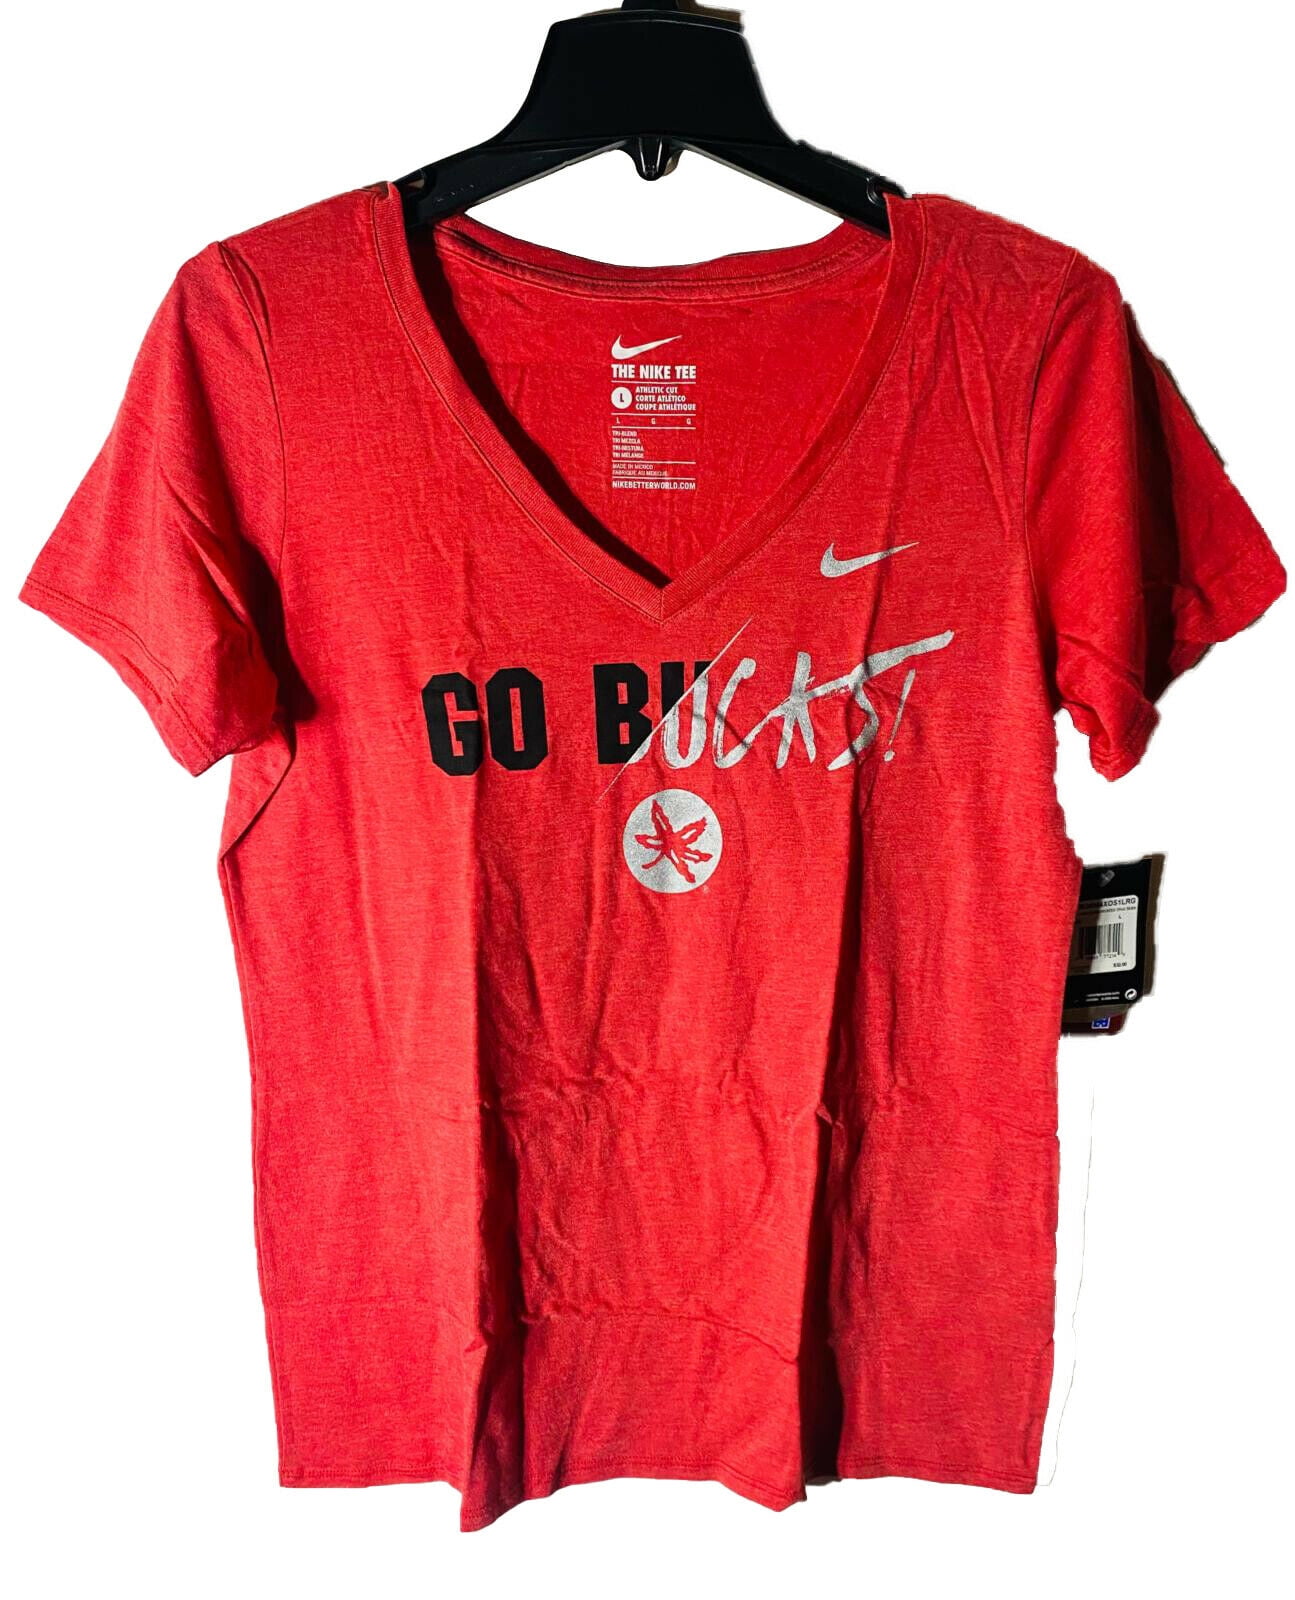 Nike Athletic Cut Bucast The Nike Tee, Red T-Shirt - LARGE - Walmart.com